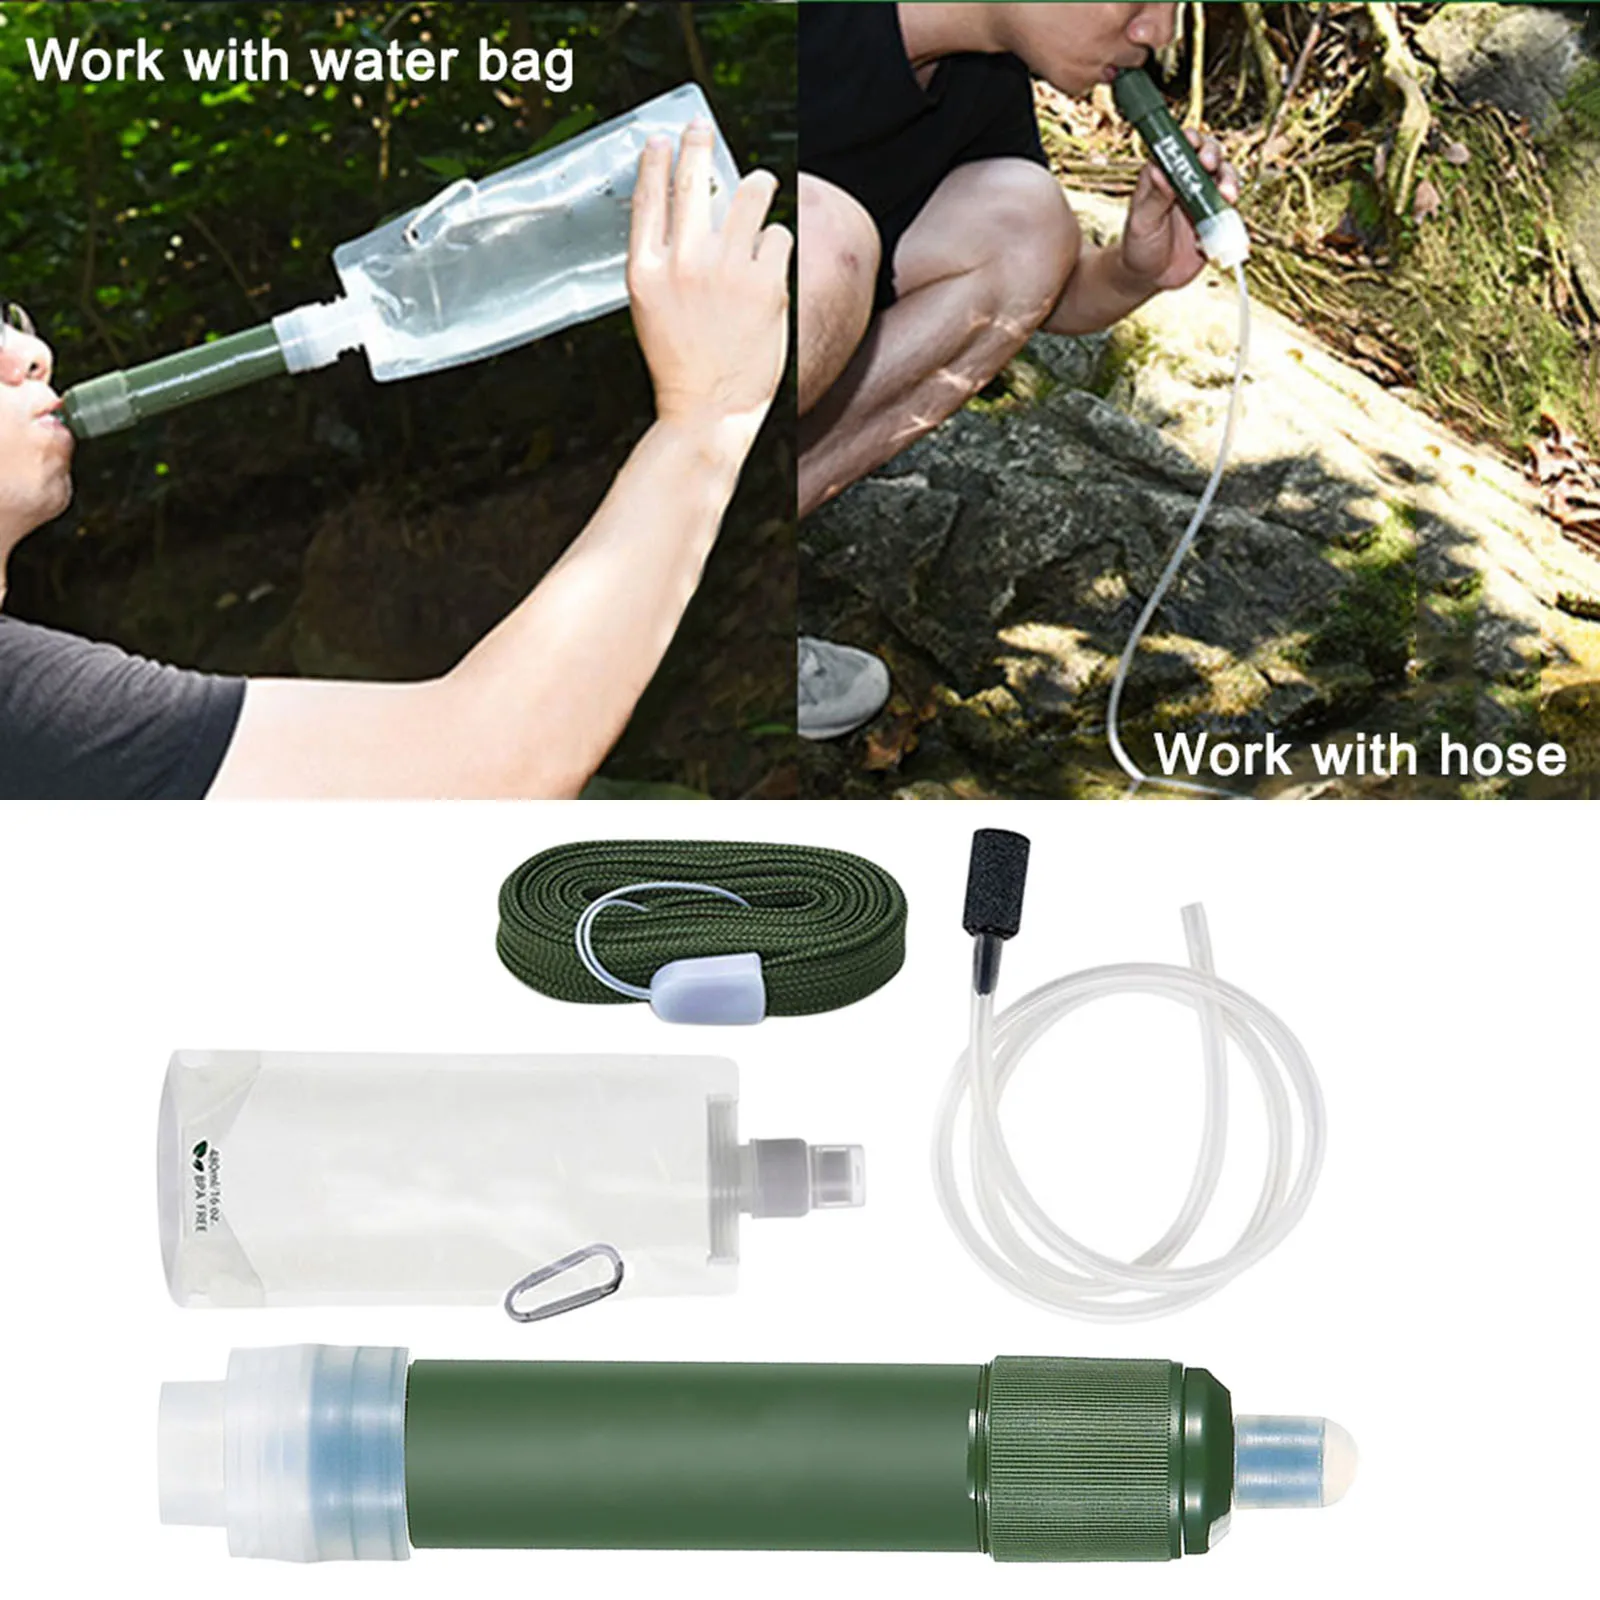 Outdoor Survival Water Filter Straw Purifier Filtration System Preparedness